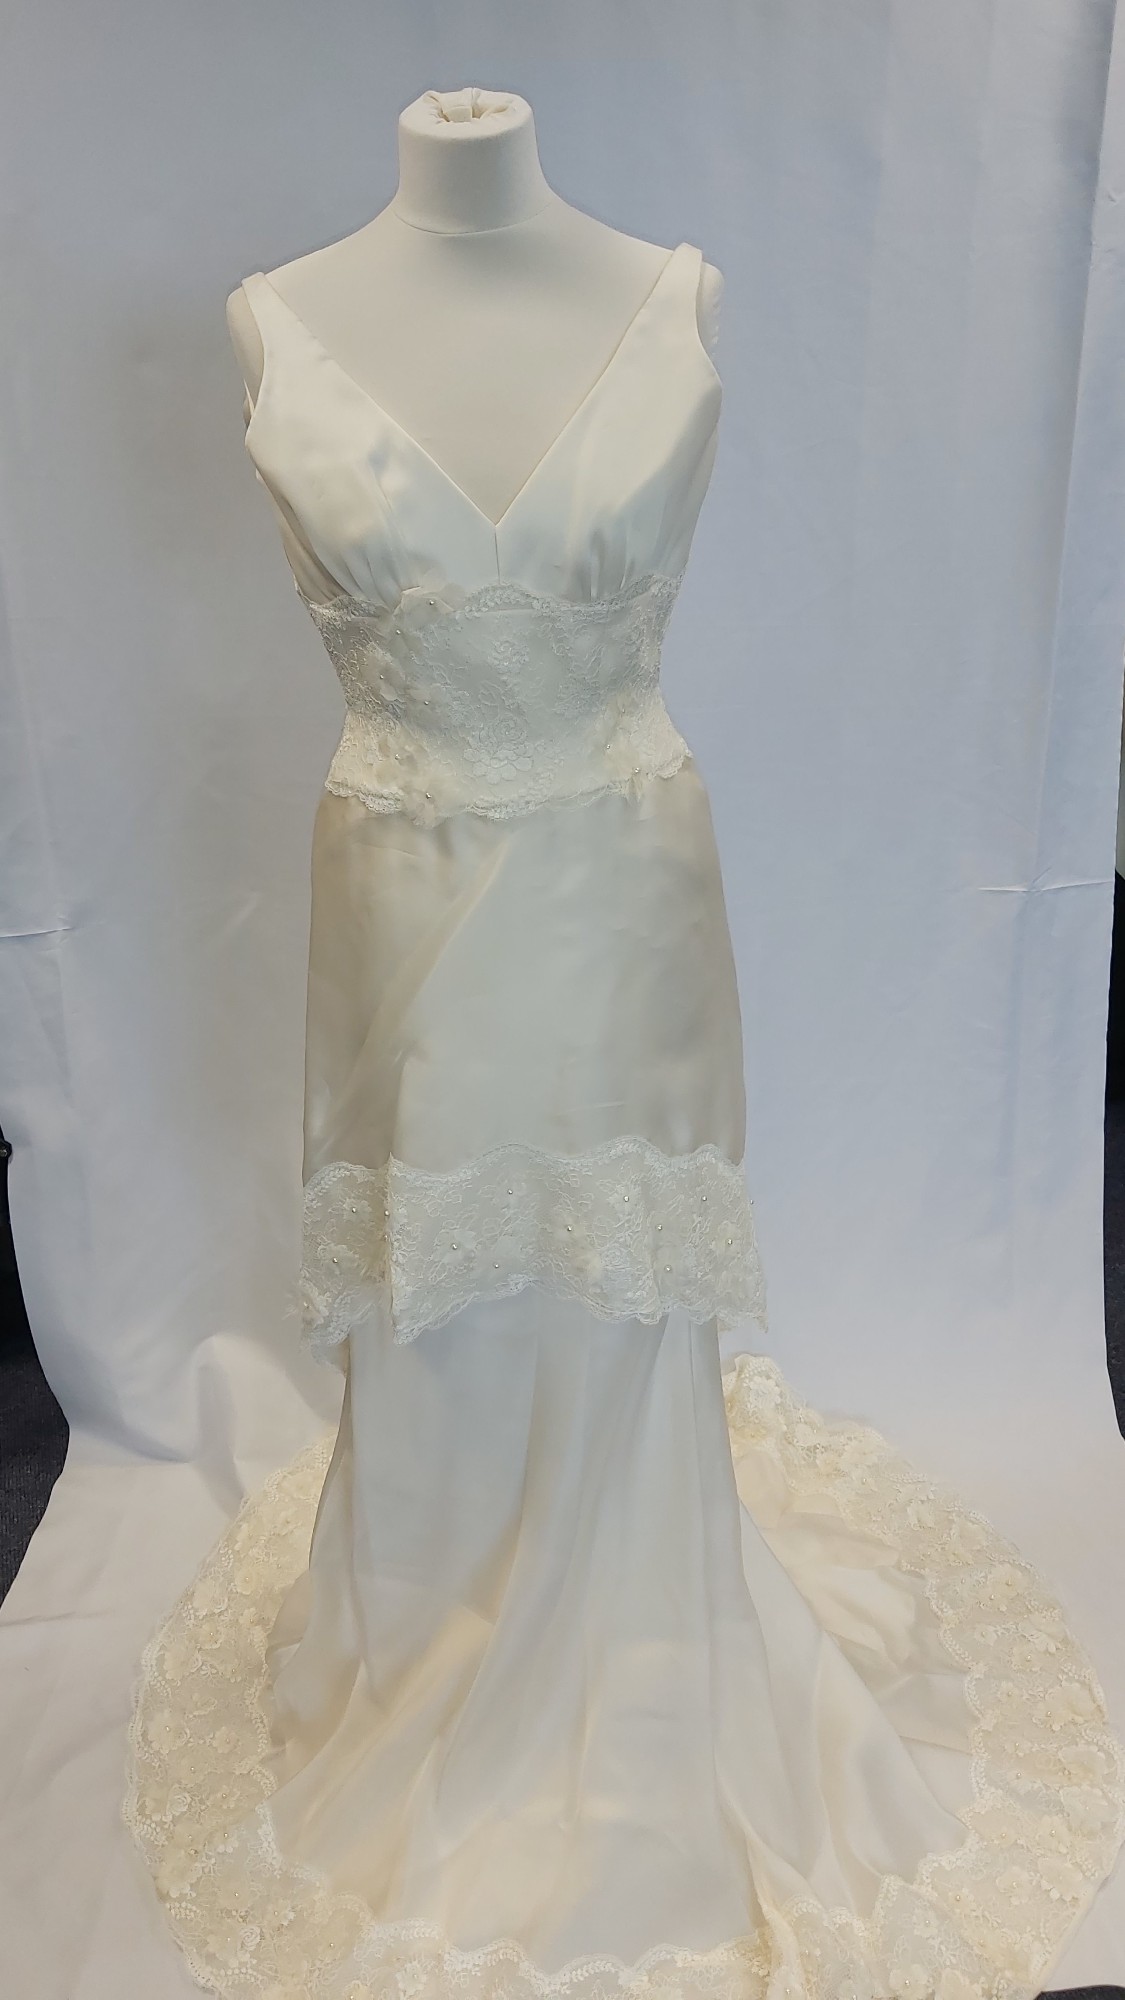 Cocoe Voci Sample Wedding Dress Save 96% - Stillwhite